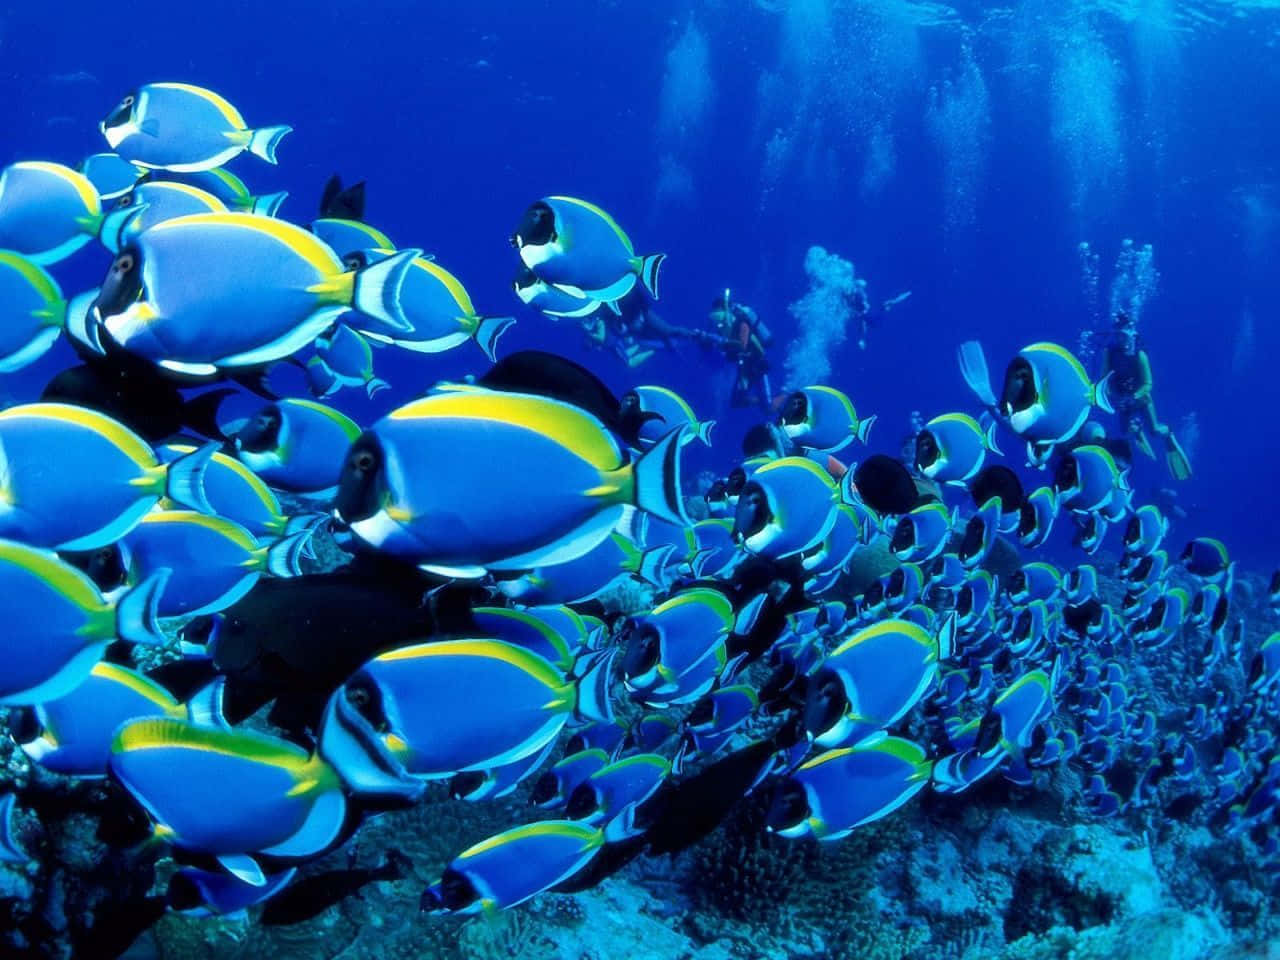 Desktopbildschirm Mit Pulverblauen Segelflossentangfischen Wallpaper